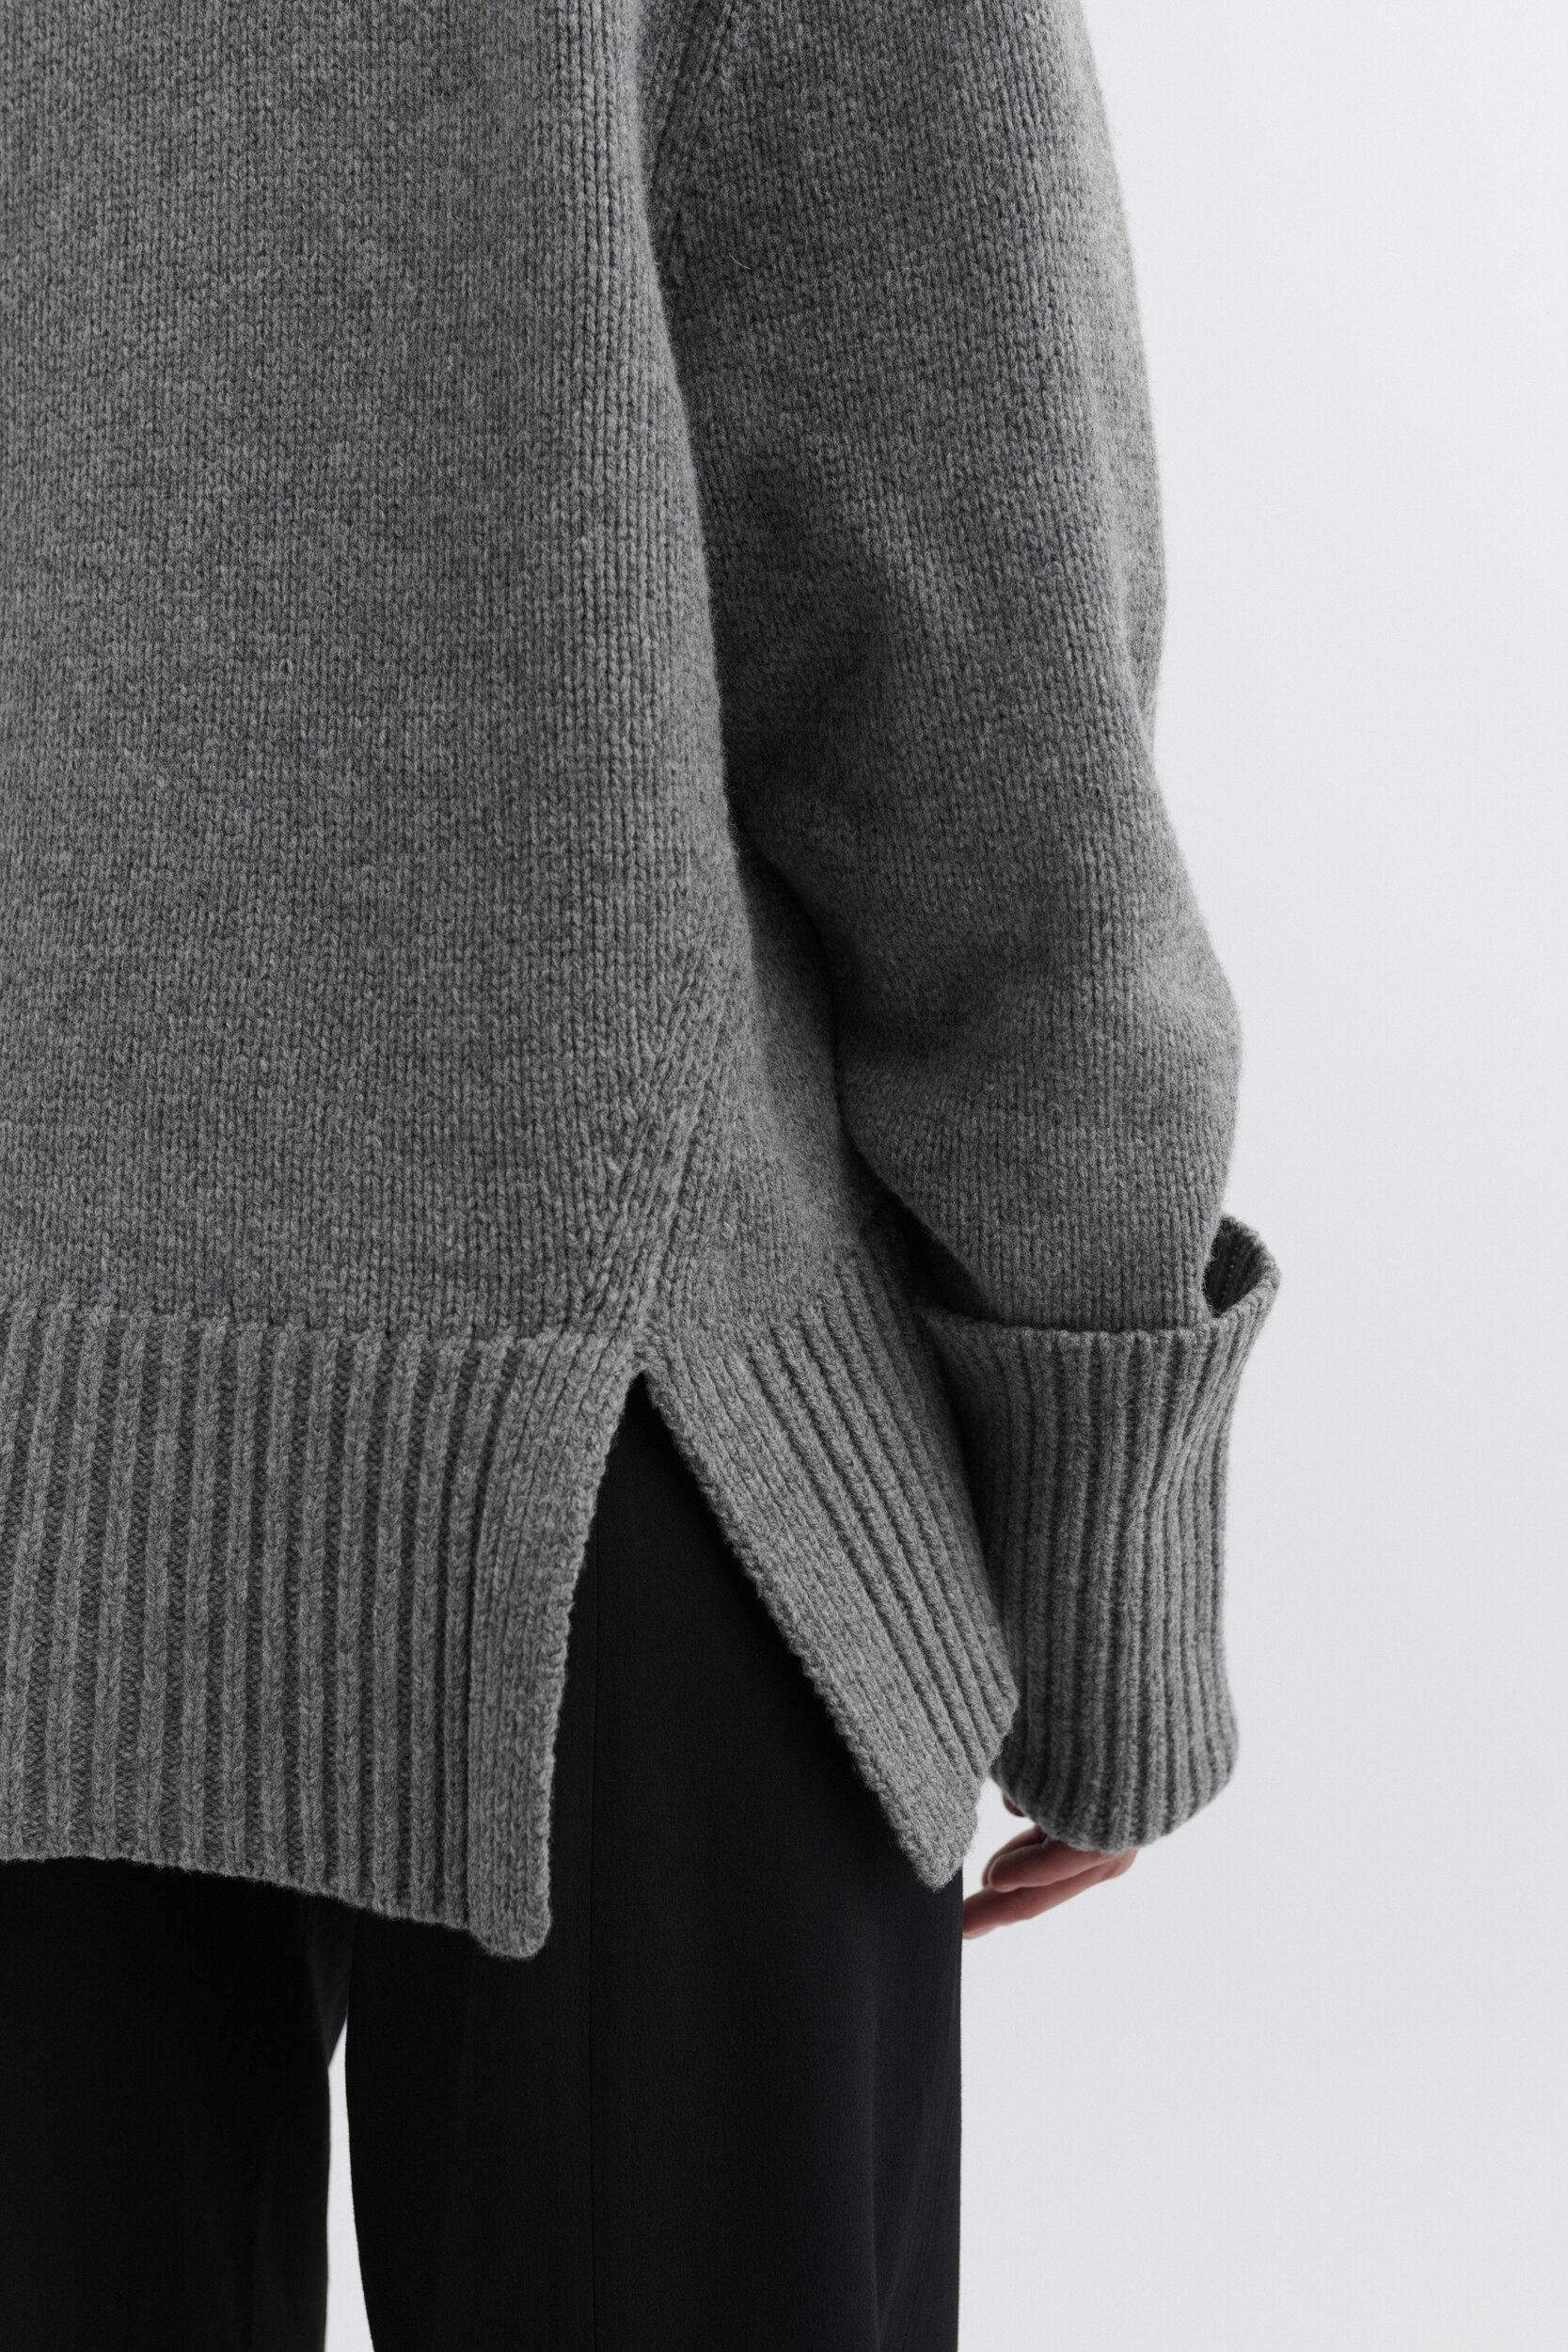 Remain Turtleneck Sweater - 6